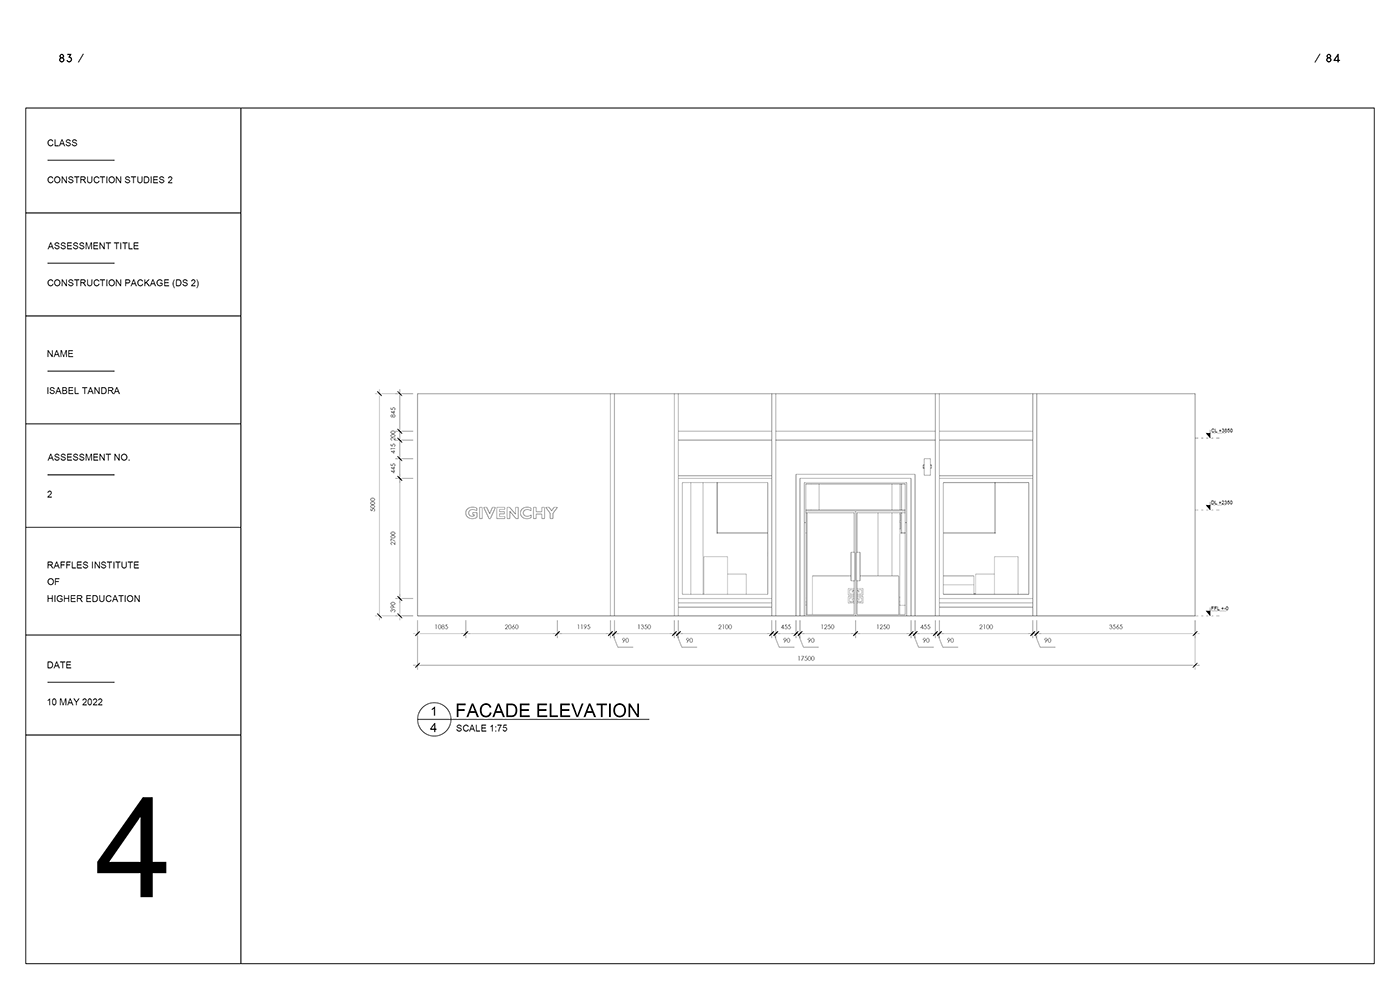 interior design  Interior Architecture design 3D SketchUP visualization Render Interior vray render